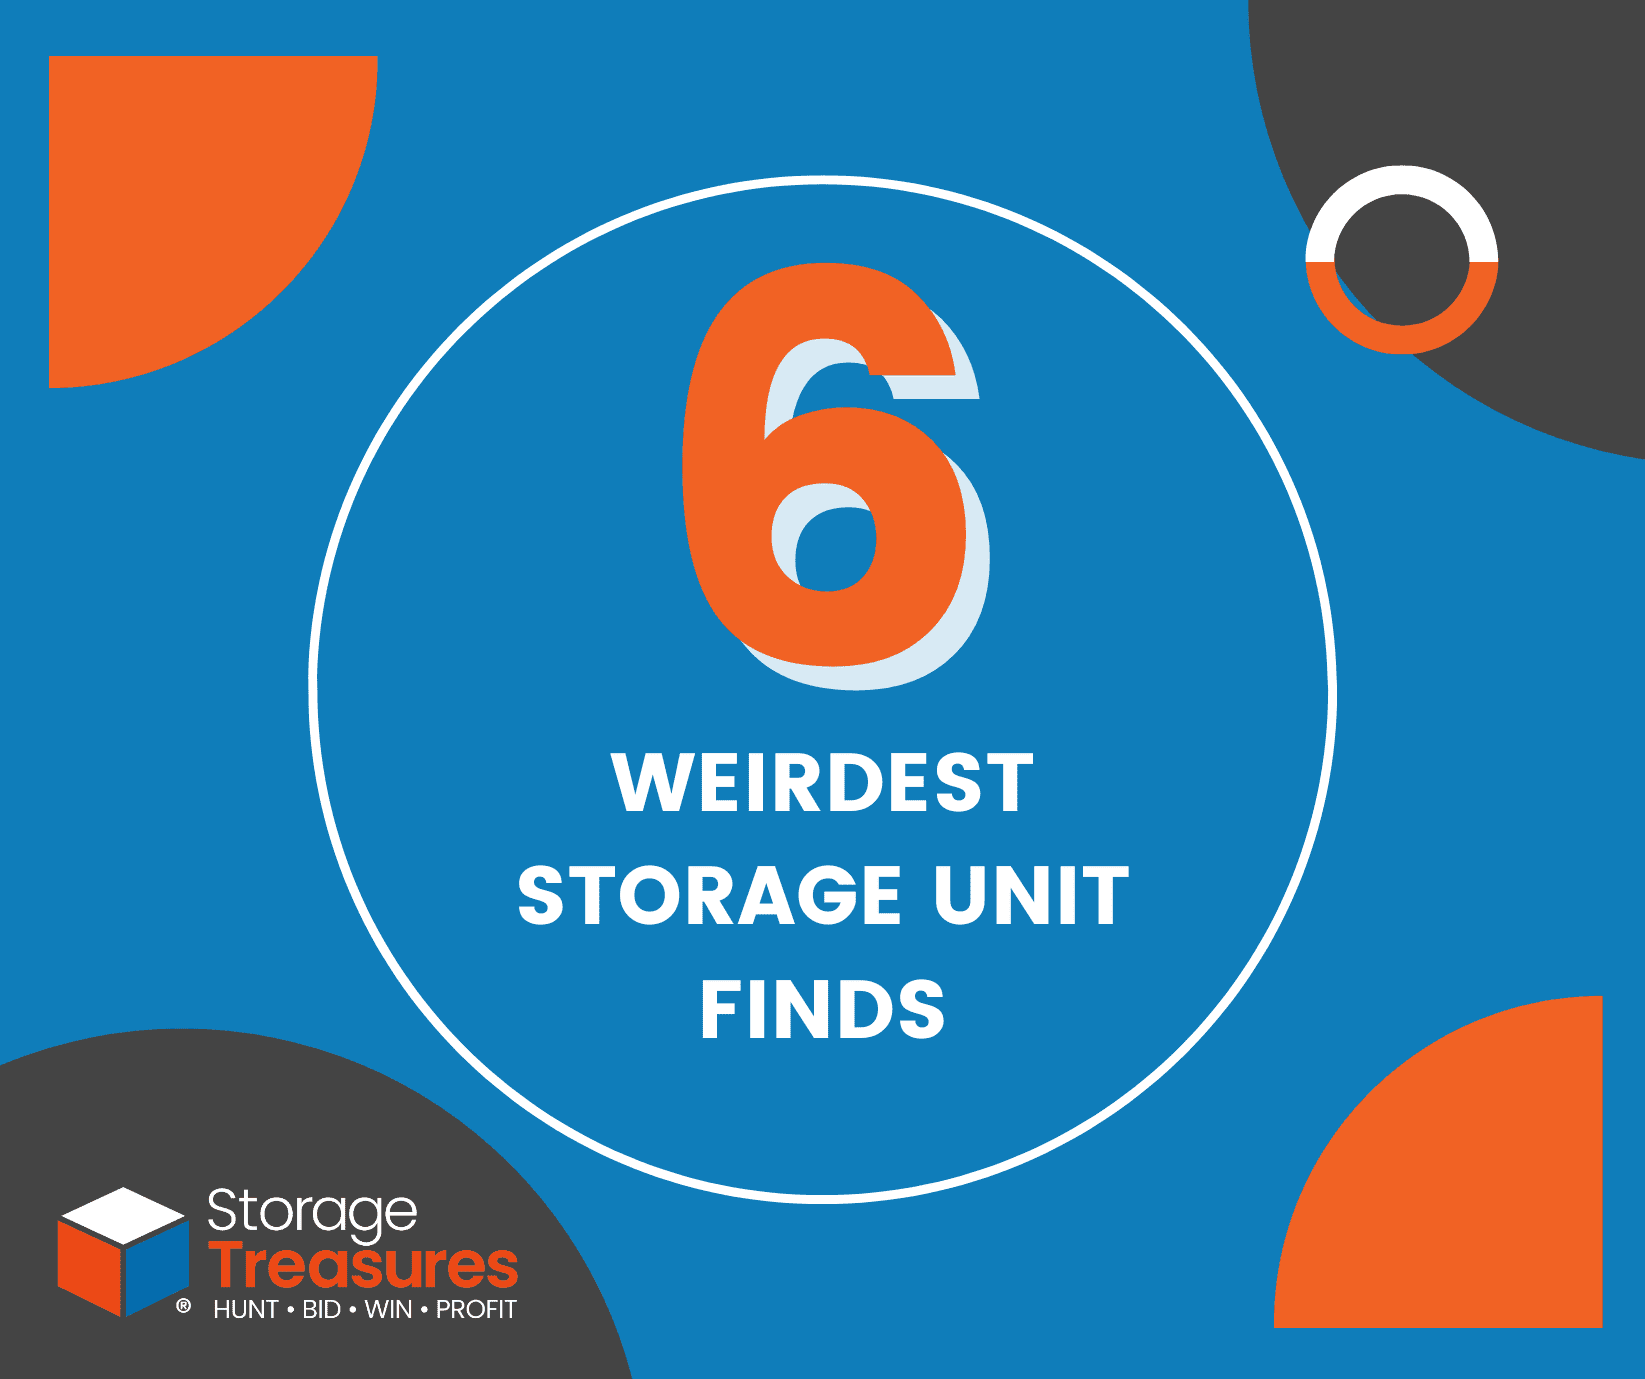 Here are the weirdest storage unit finds.